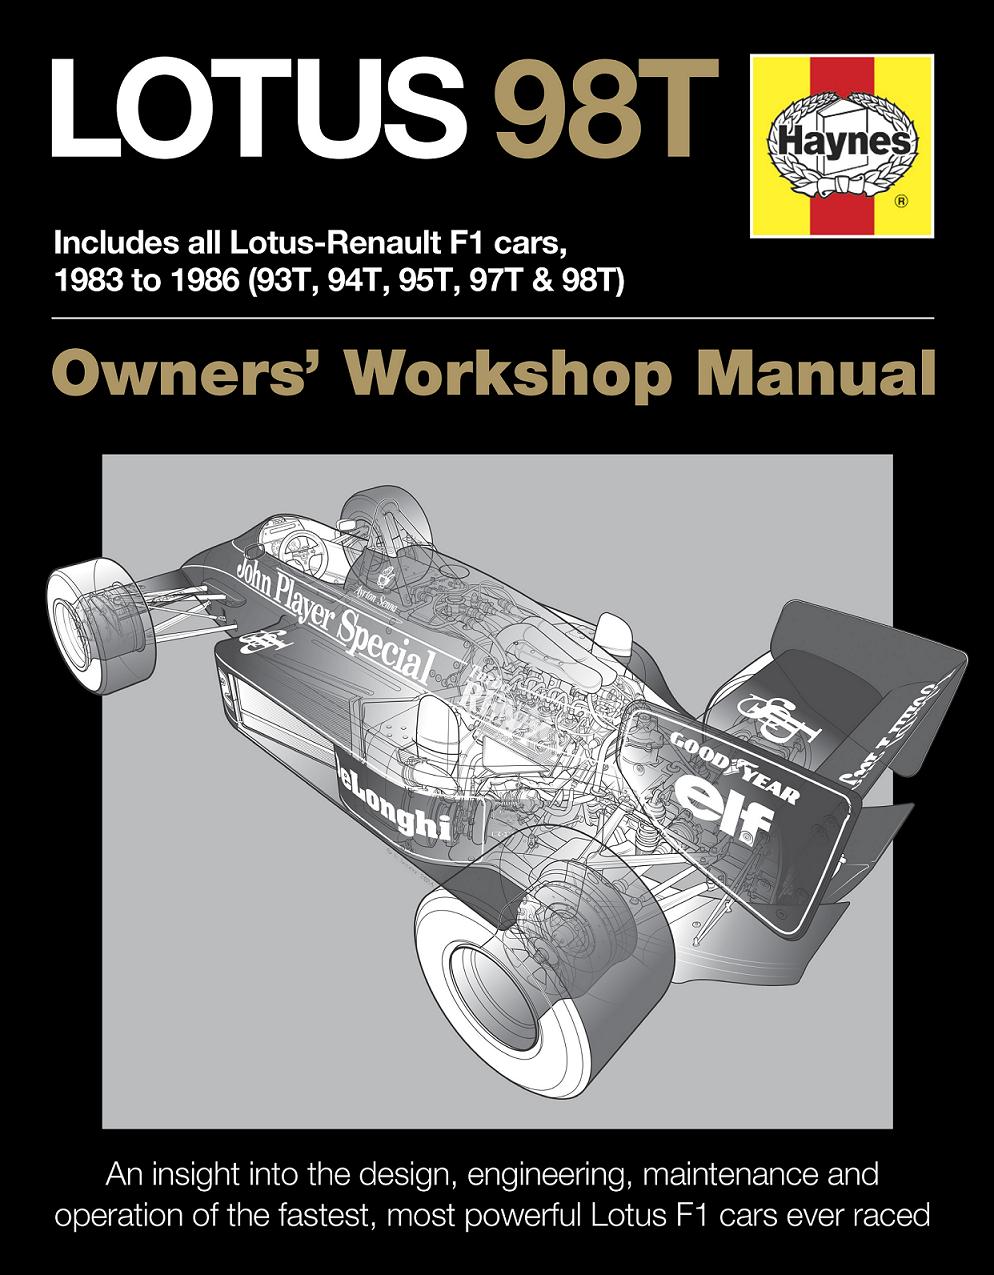 Lotus 98T (1983-1986) Owners' Workshop Manual (Stephen Slater